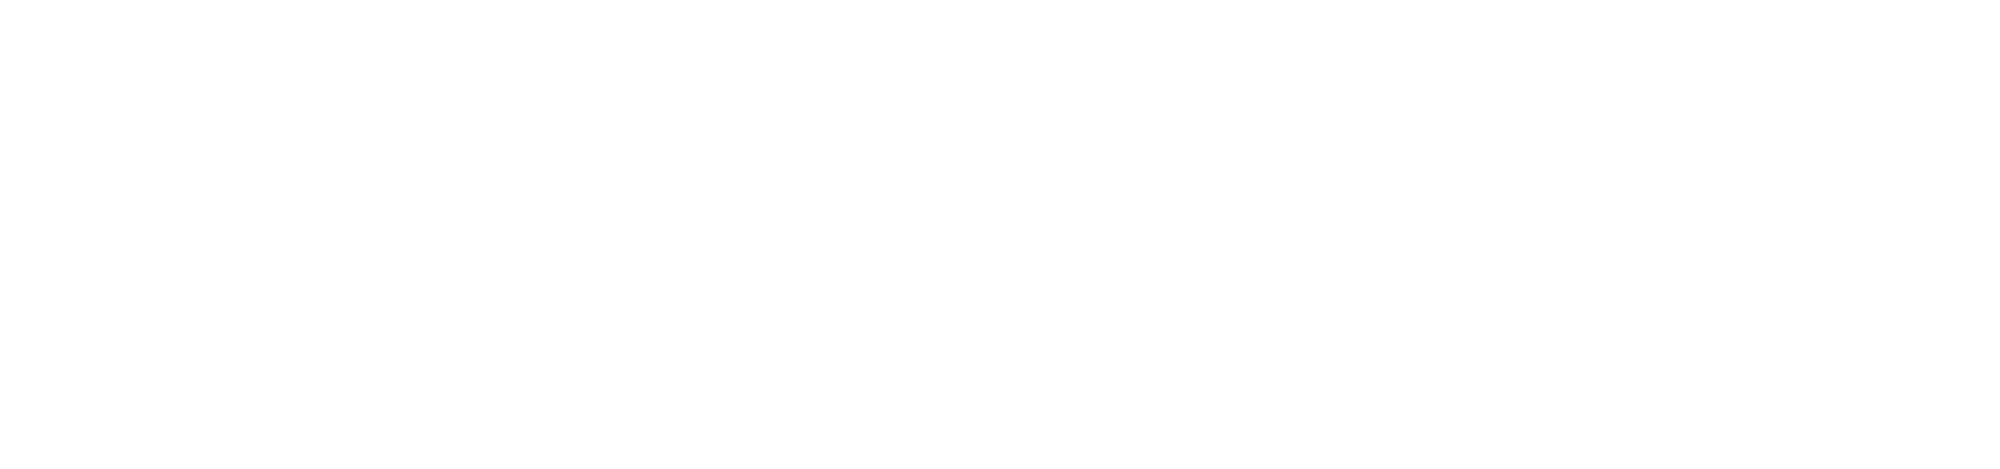 CLFCU white horizontal logo